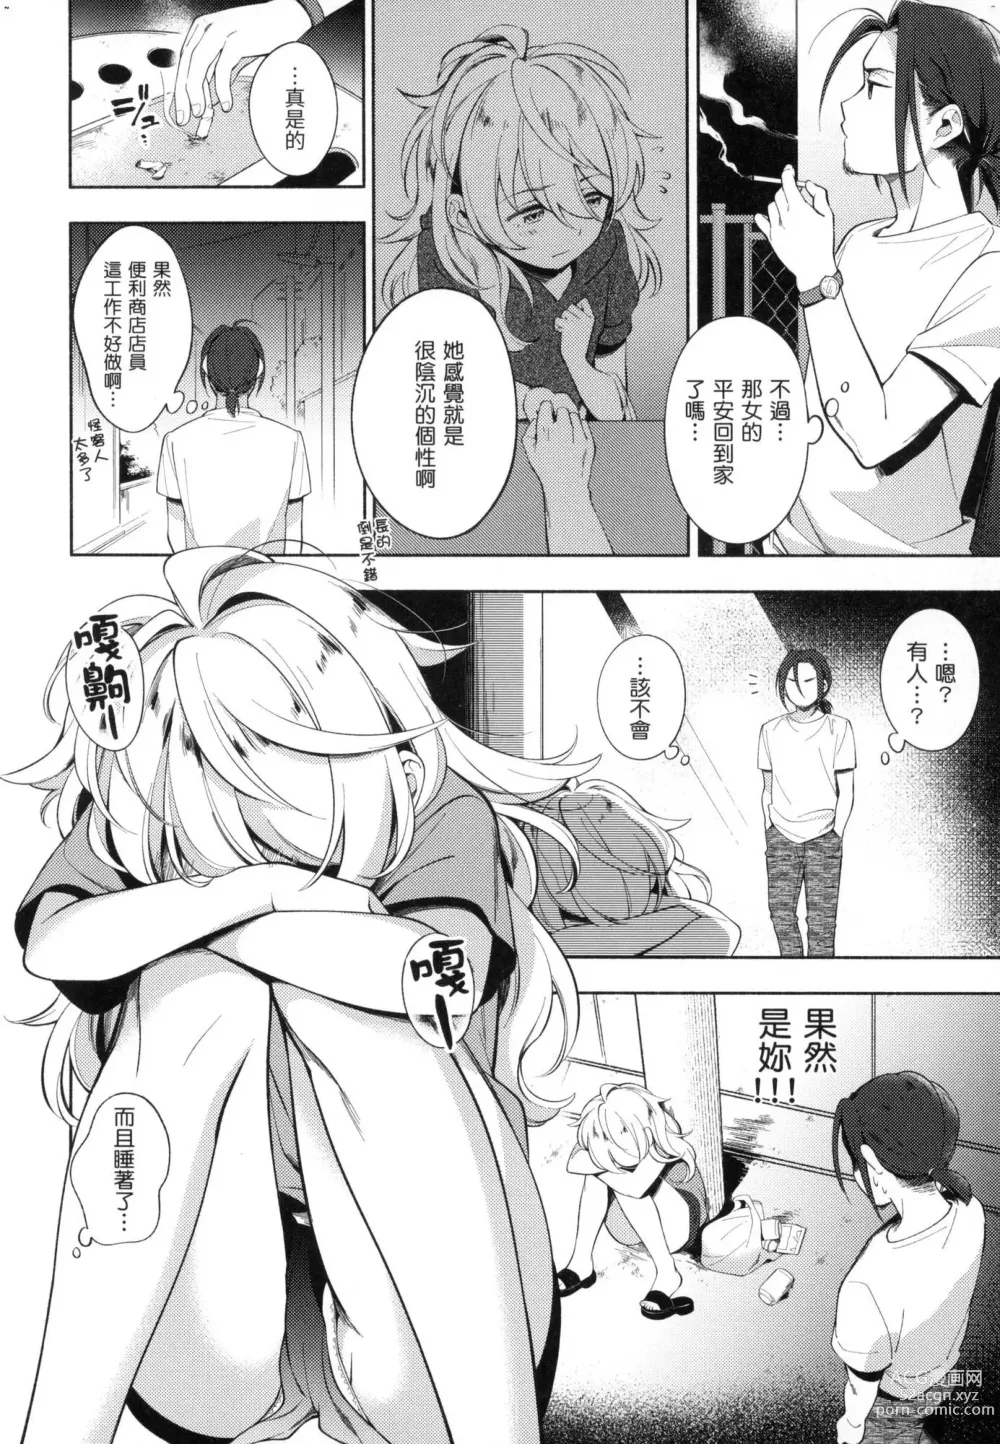 Page 161 of manga 謝謝招待 (decensored)